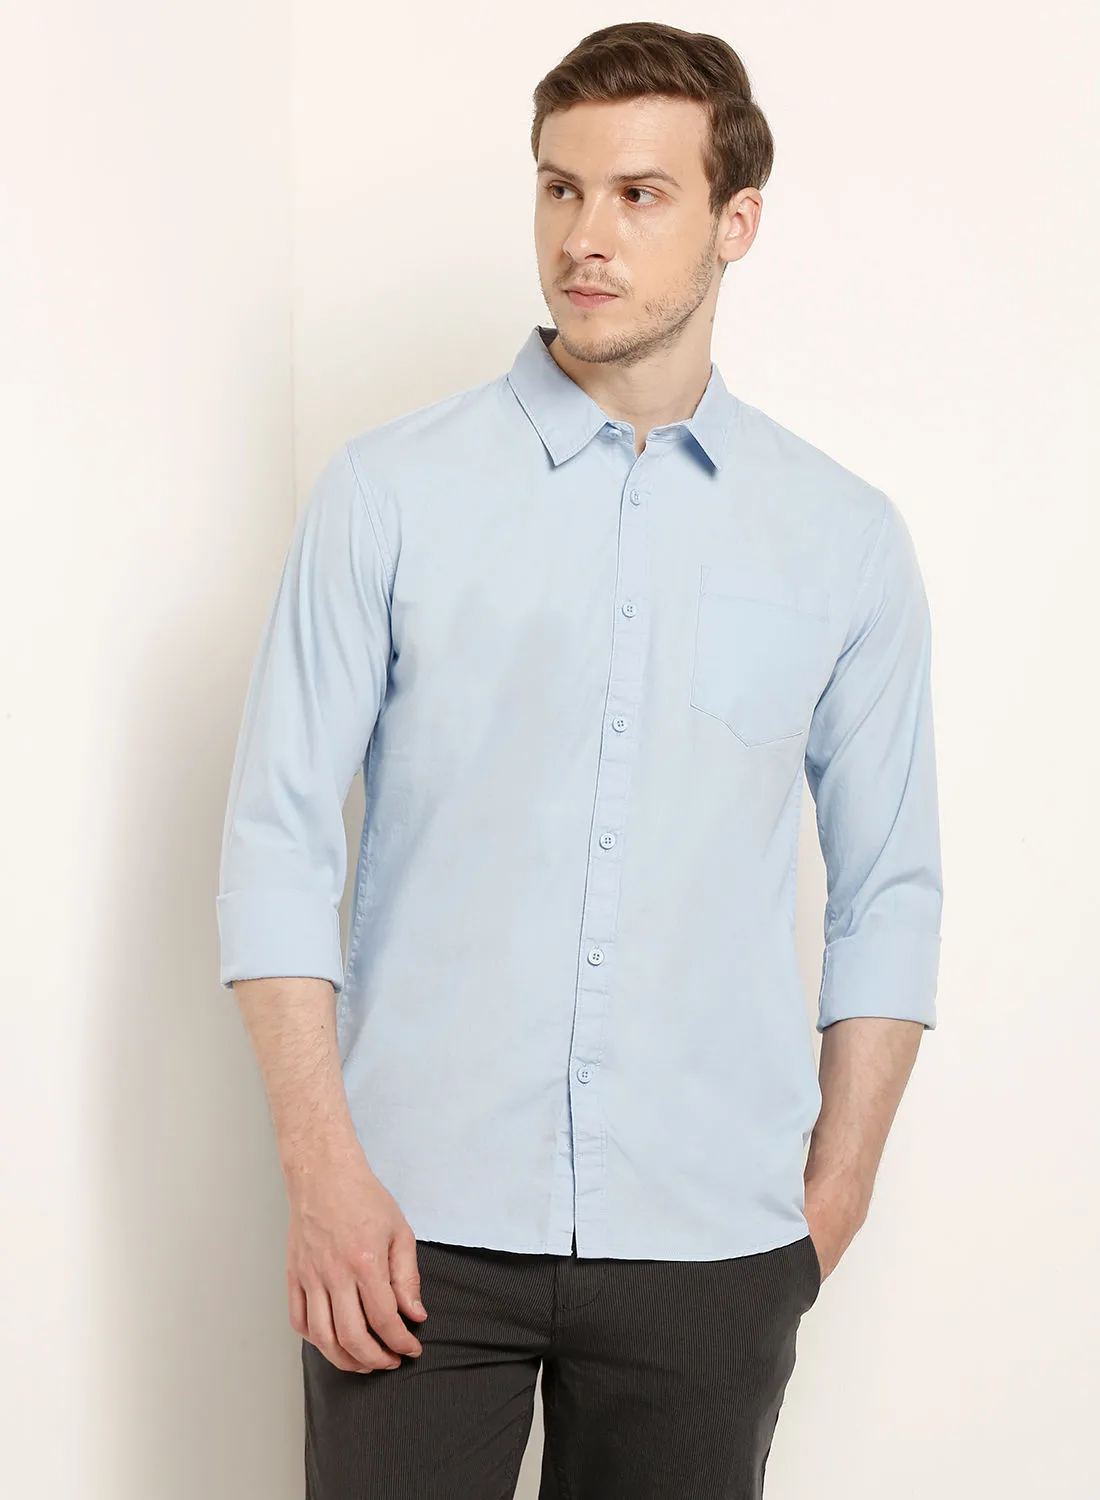 ABOF قميص عادي مريح برقبة بياقة عادية ومريح أزرق فاتح صيني